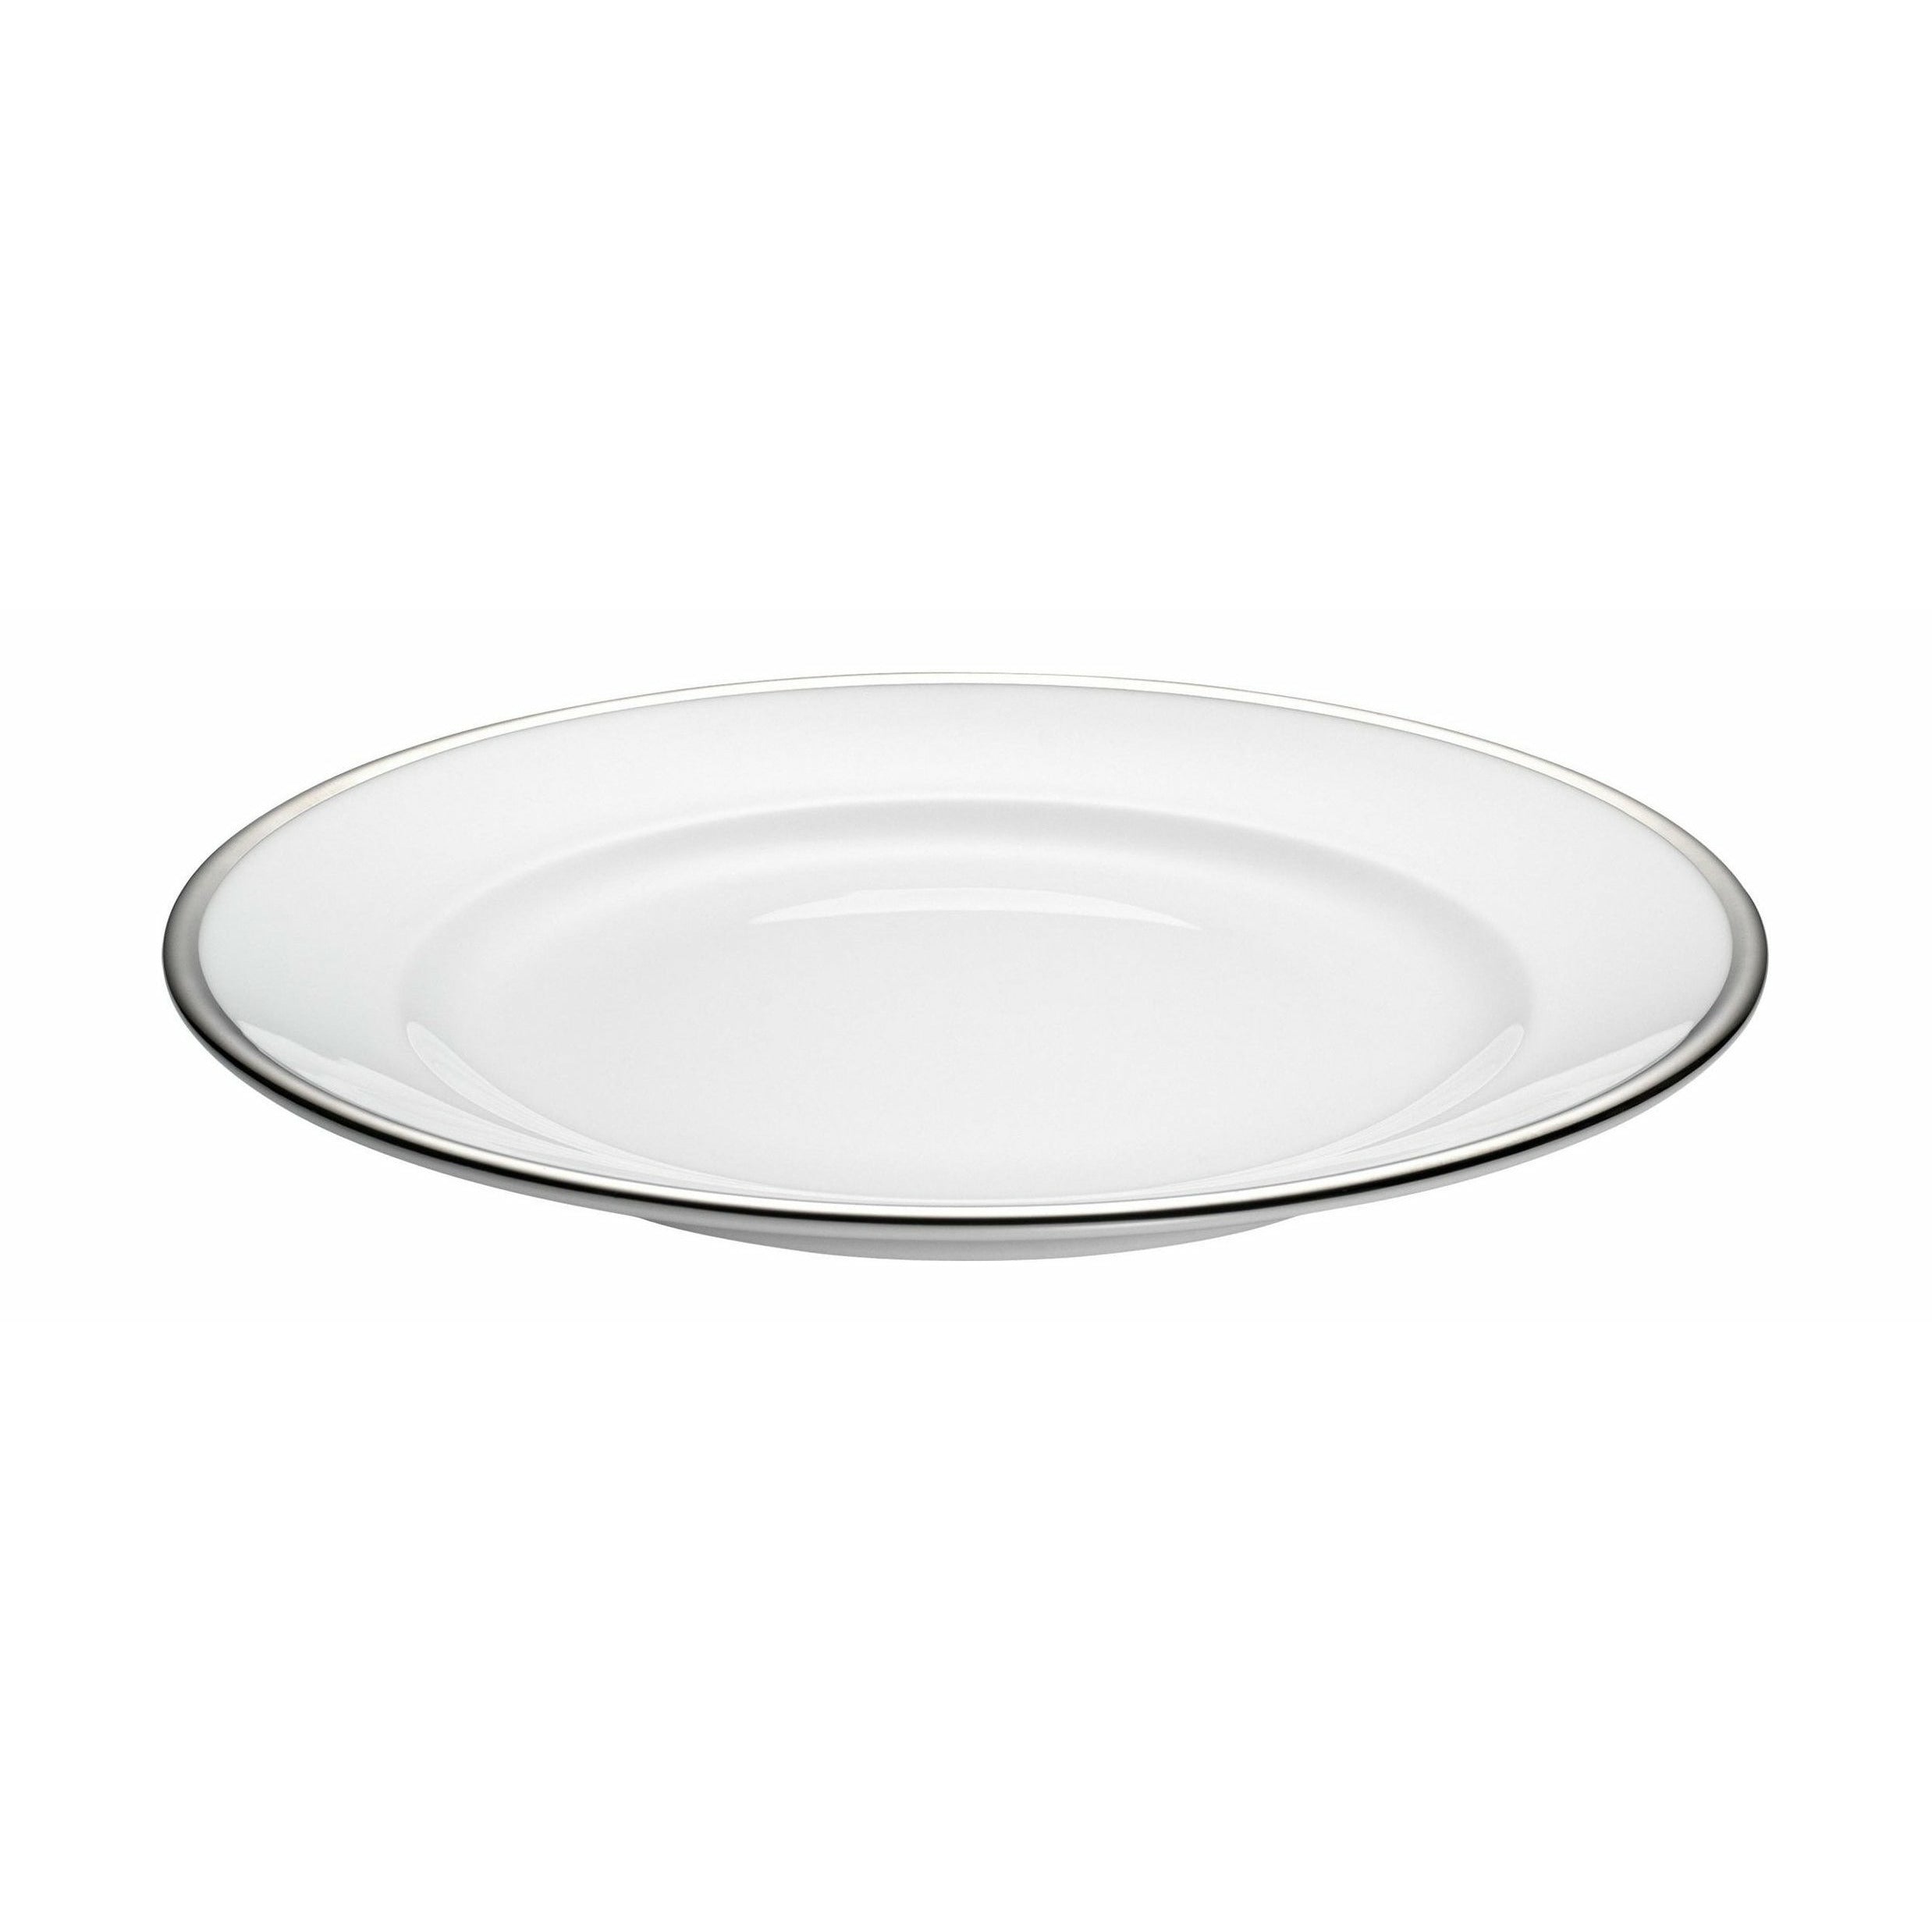 Pillivuyt Bistro Plate ø 21 Cm, White/Silver